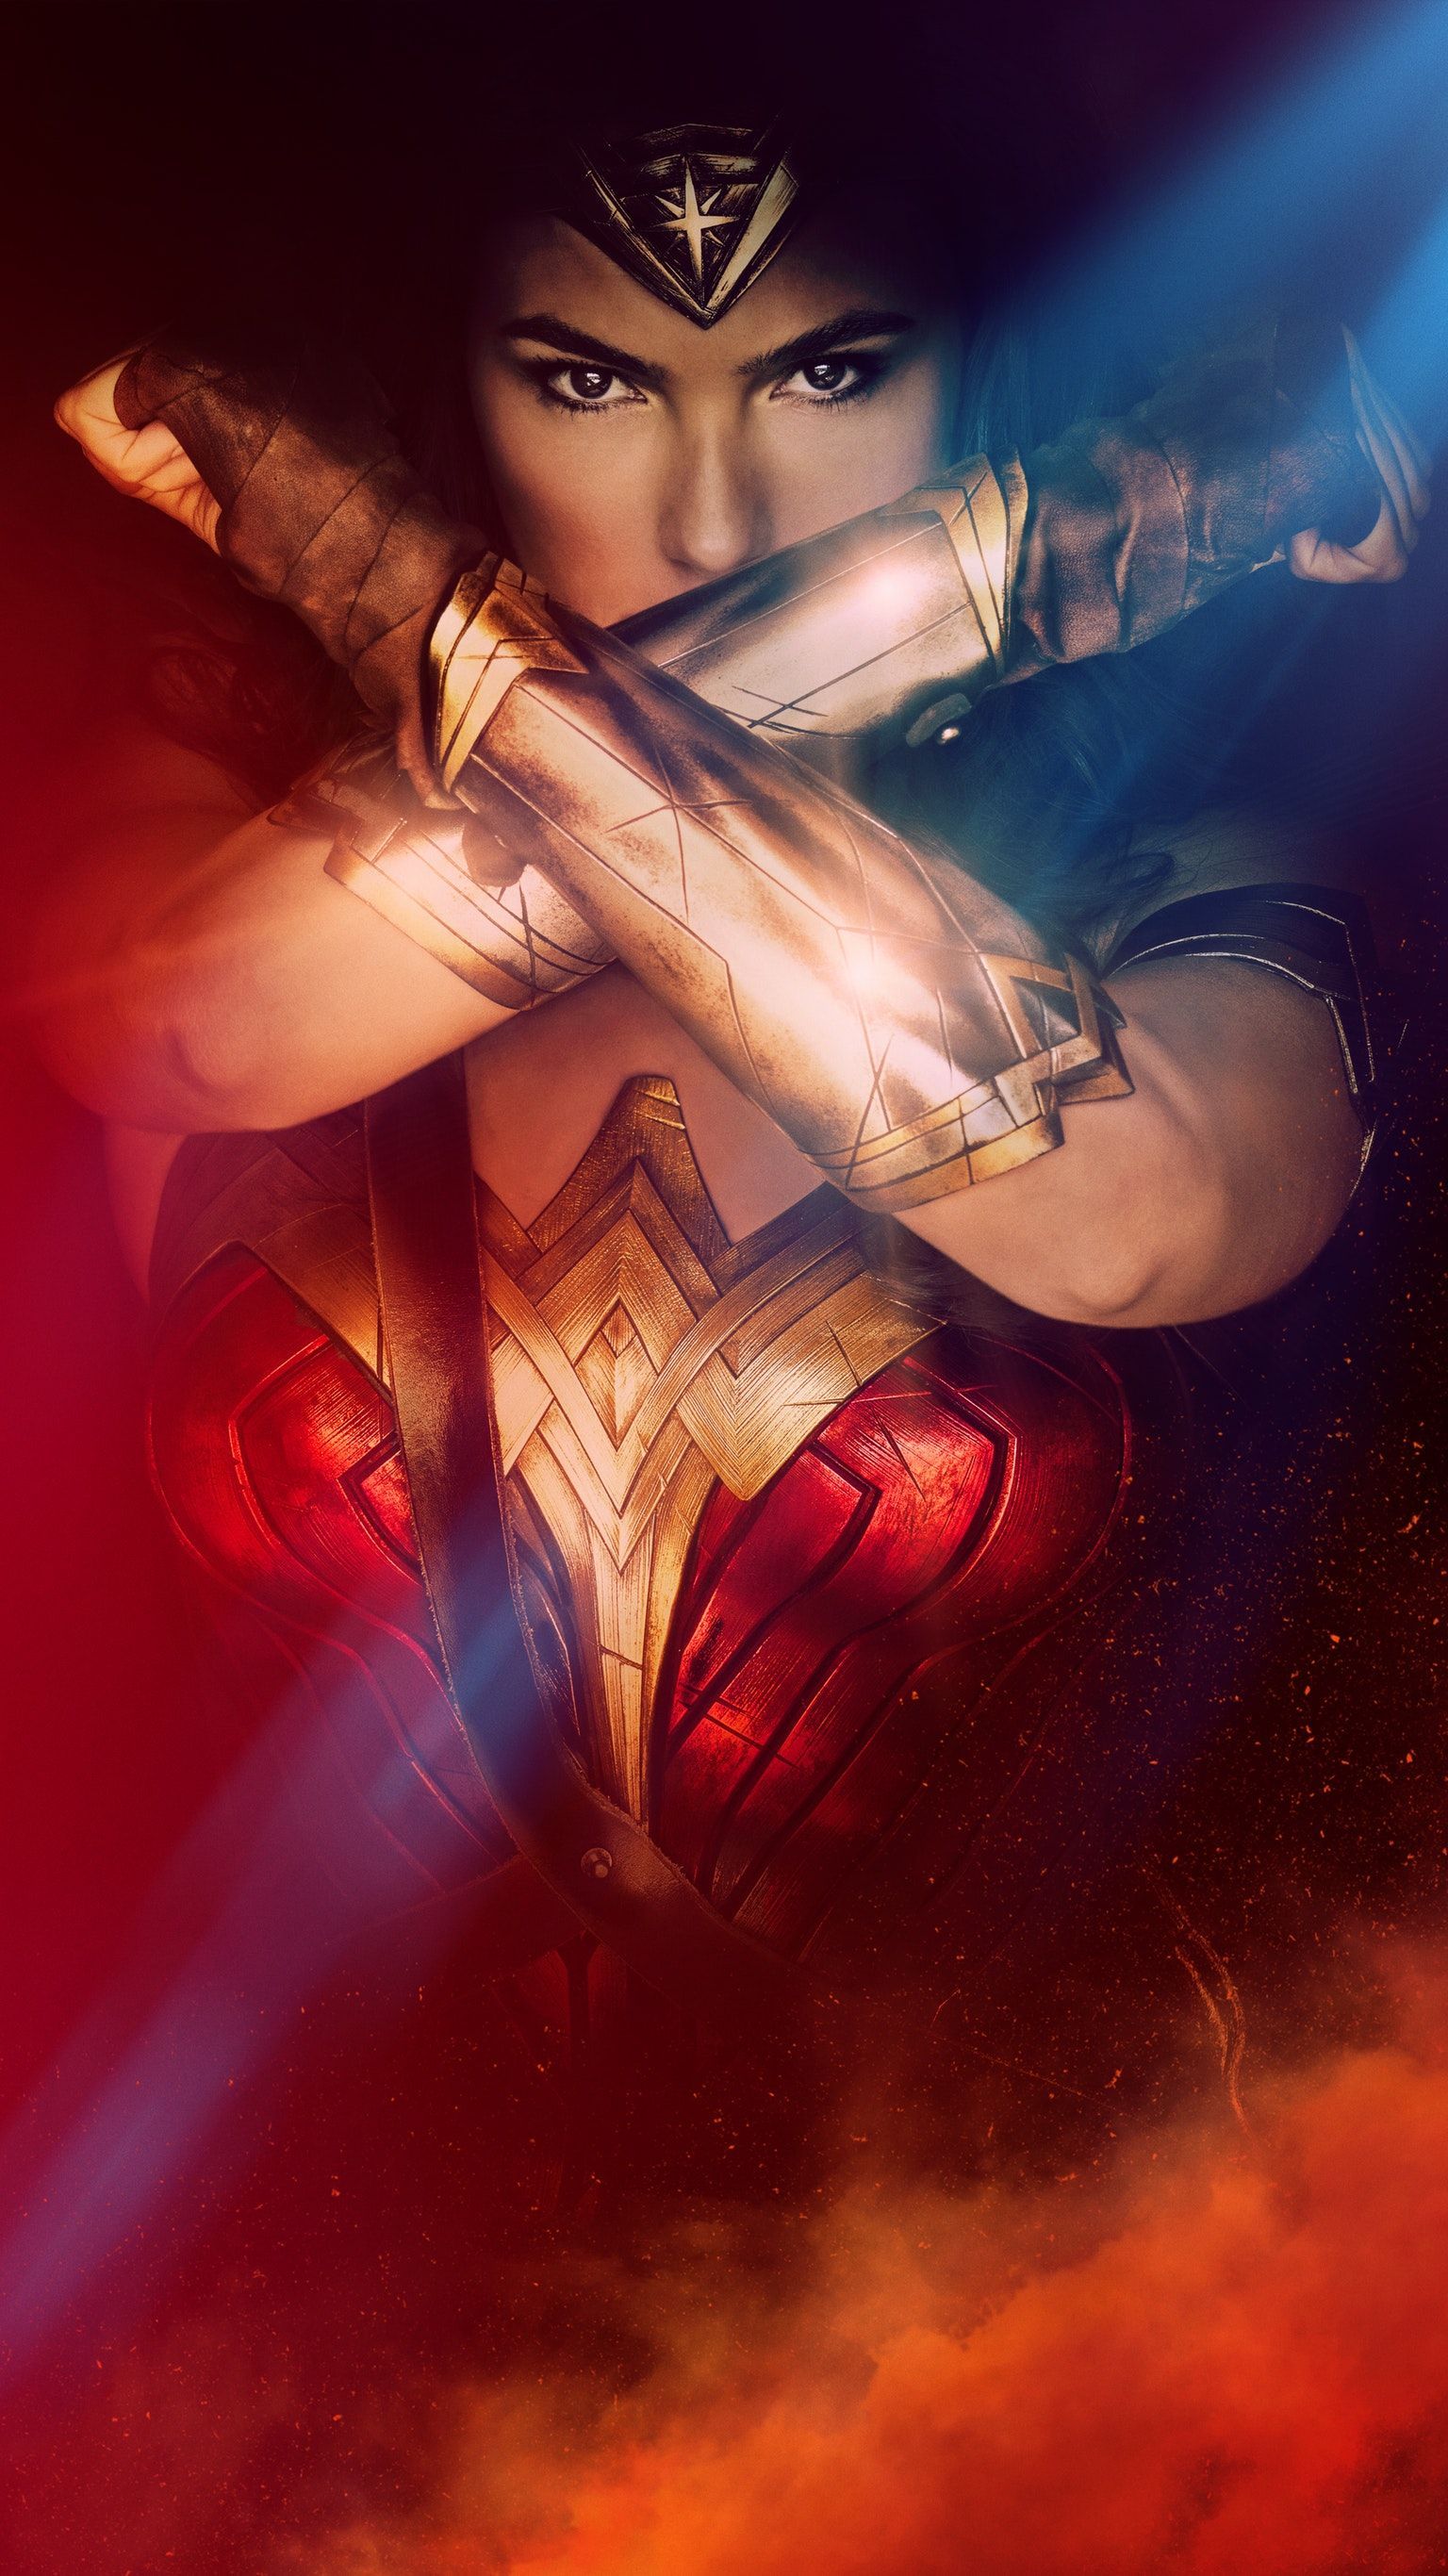 Wonder Woman (2017) Phone Wallpaper. Moviemania. Gal gadot wonder woman, Wonder woman movie, Wonder woman 2017 poster